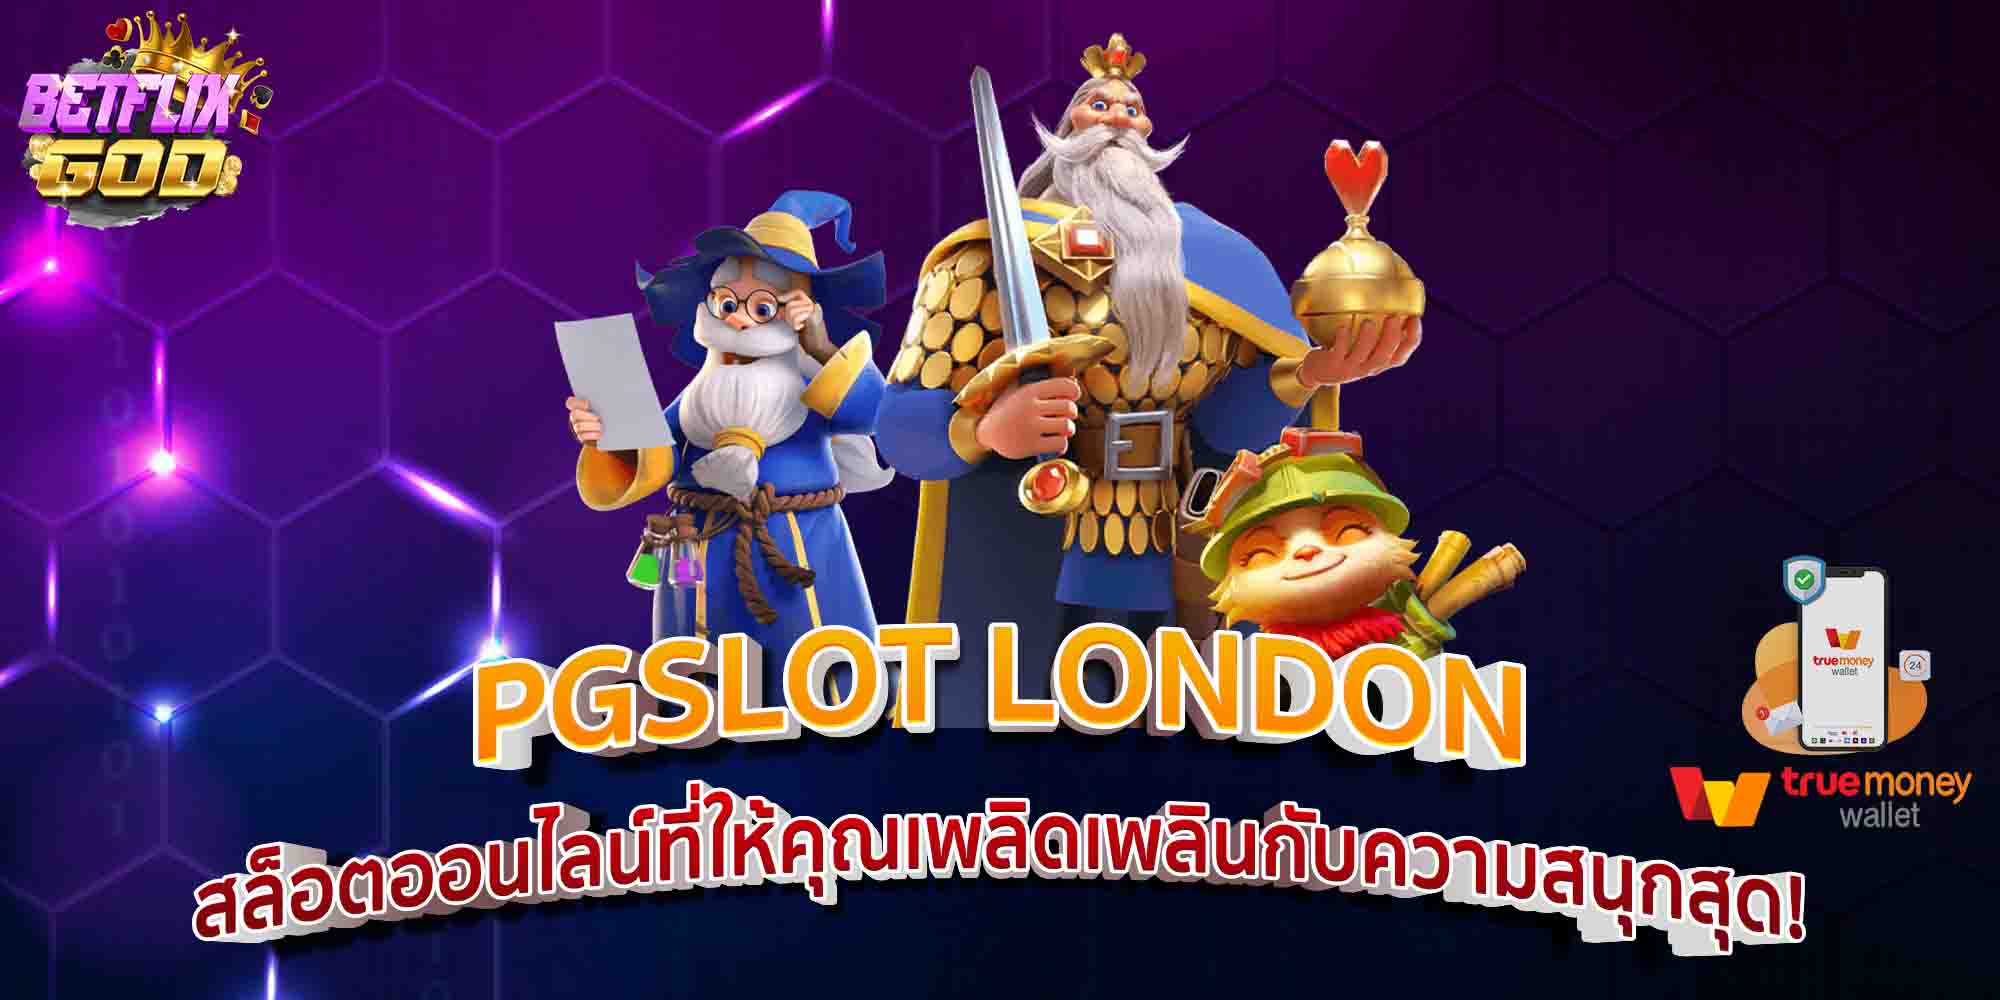 PGSLOT LONDON สล็อตออนไลน์ที่ให้คุณเพลิดเพลินกับความสนุกสุด!